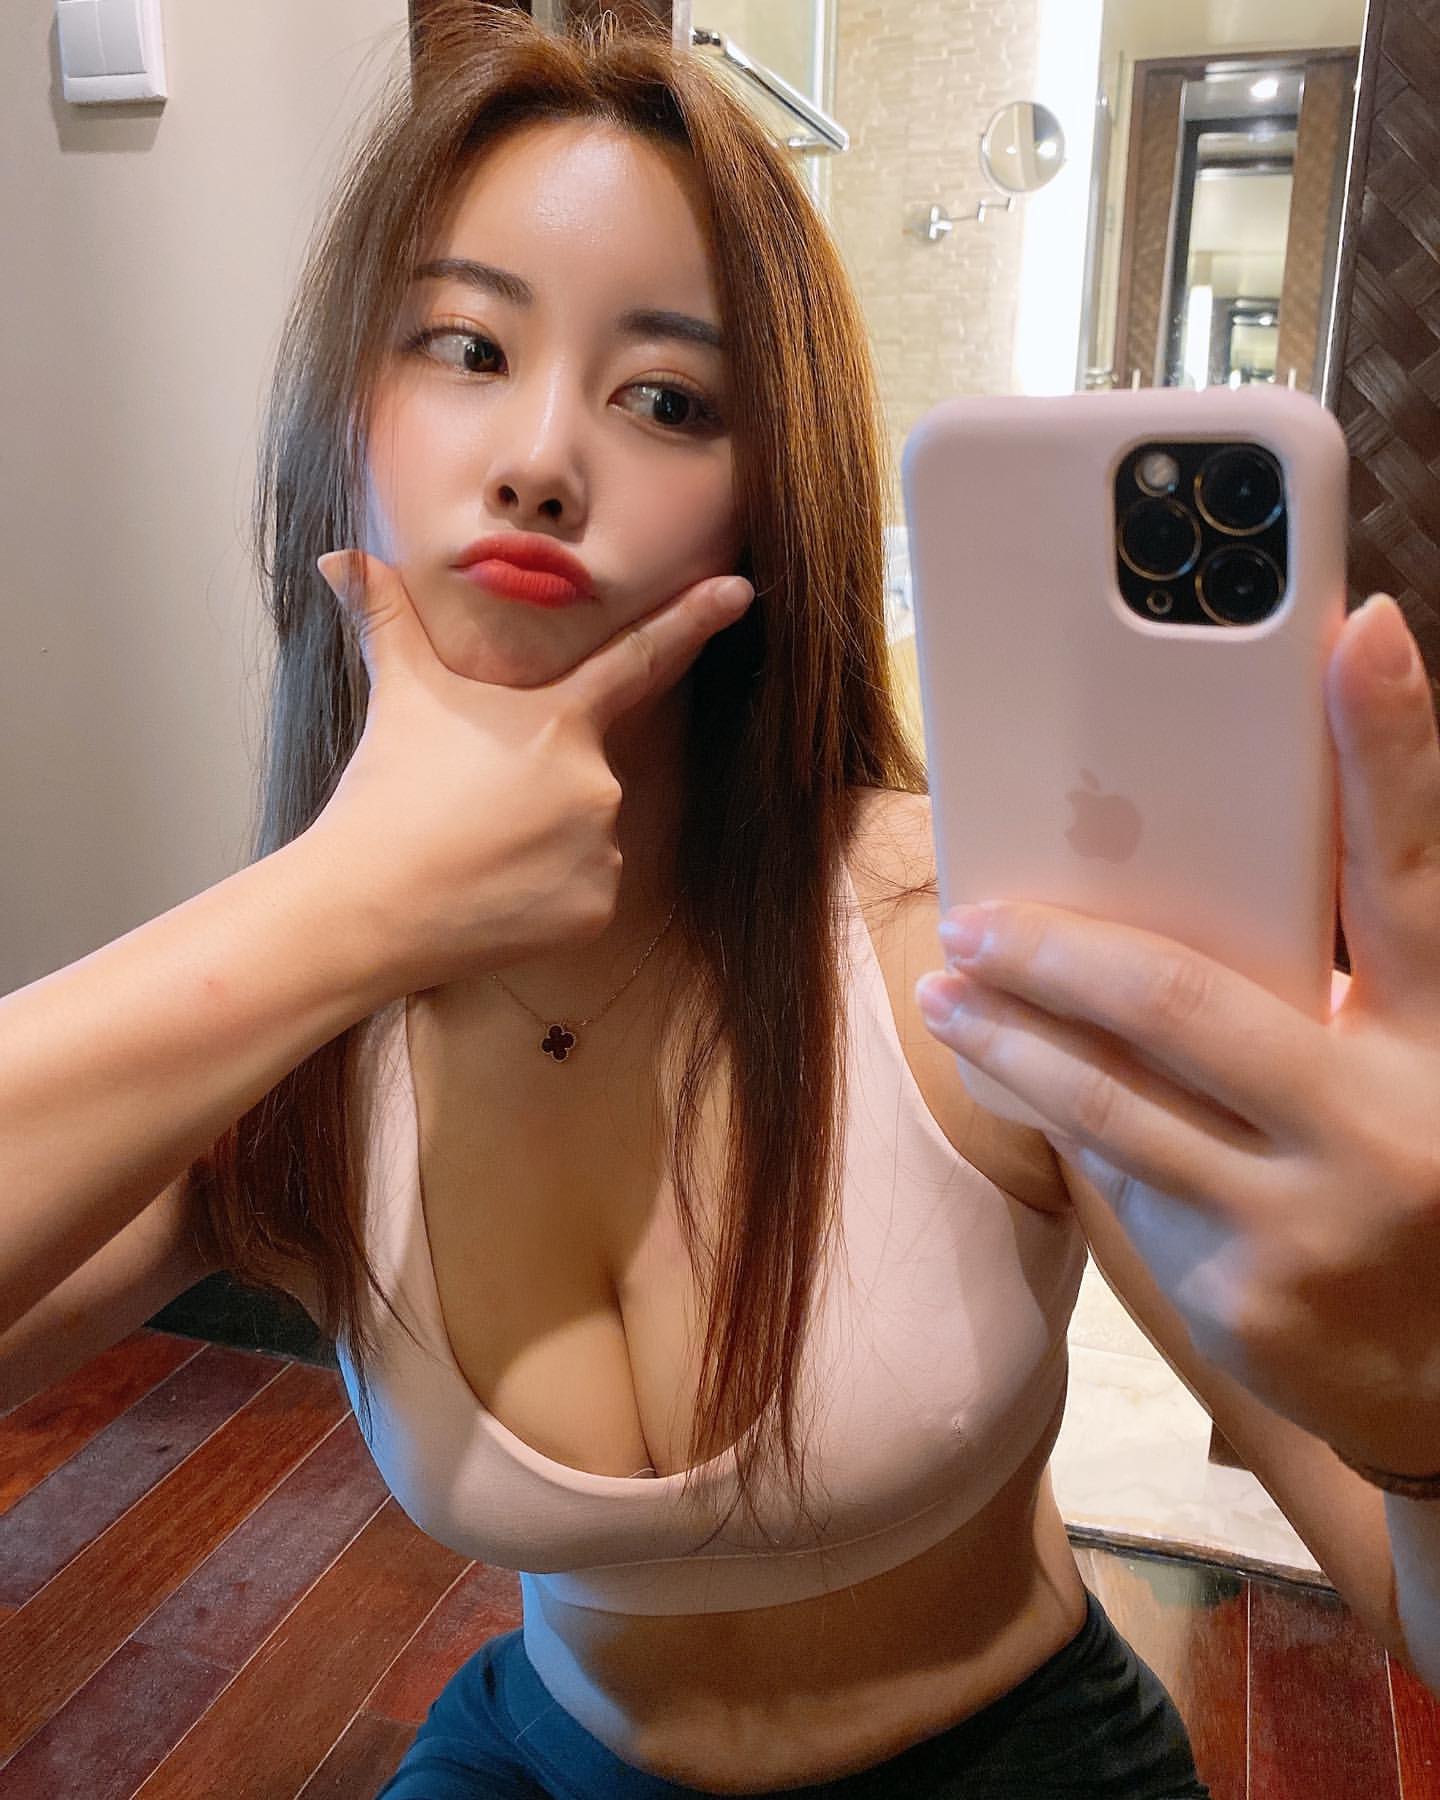 Instagram Diary Of Amy Diaryofamy J 美女 正妹 아름다움 Beauty Cute Girls Photos From Instagram Weibo Etc